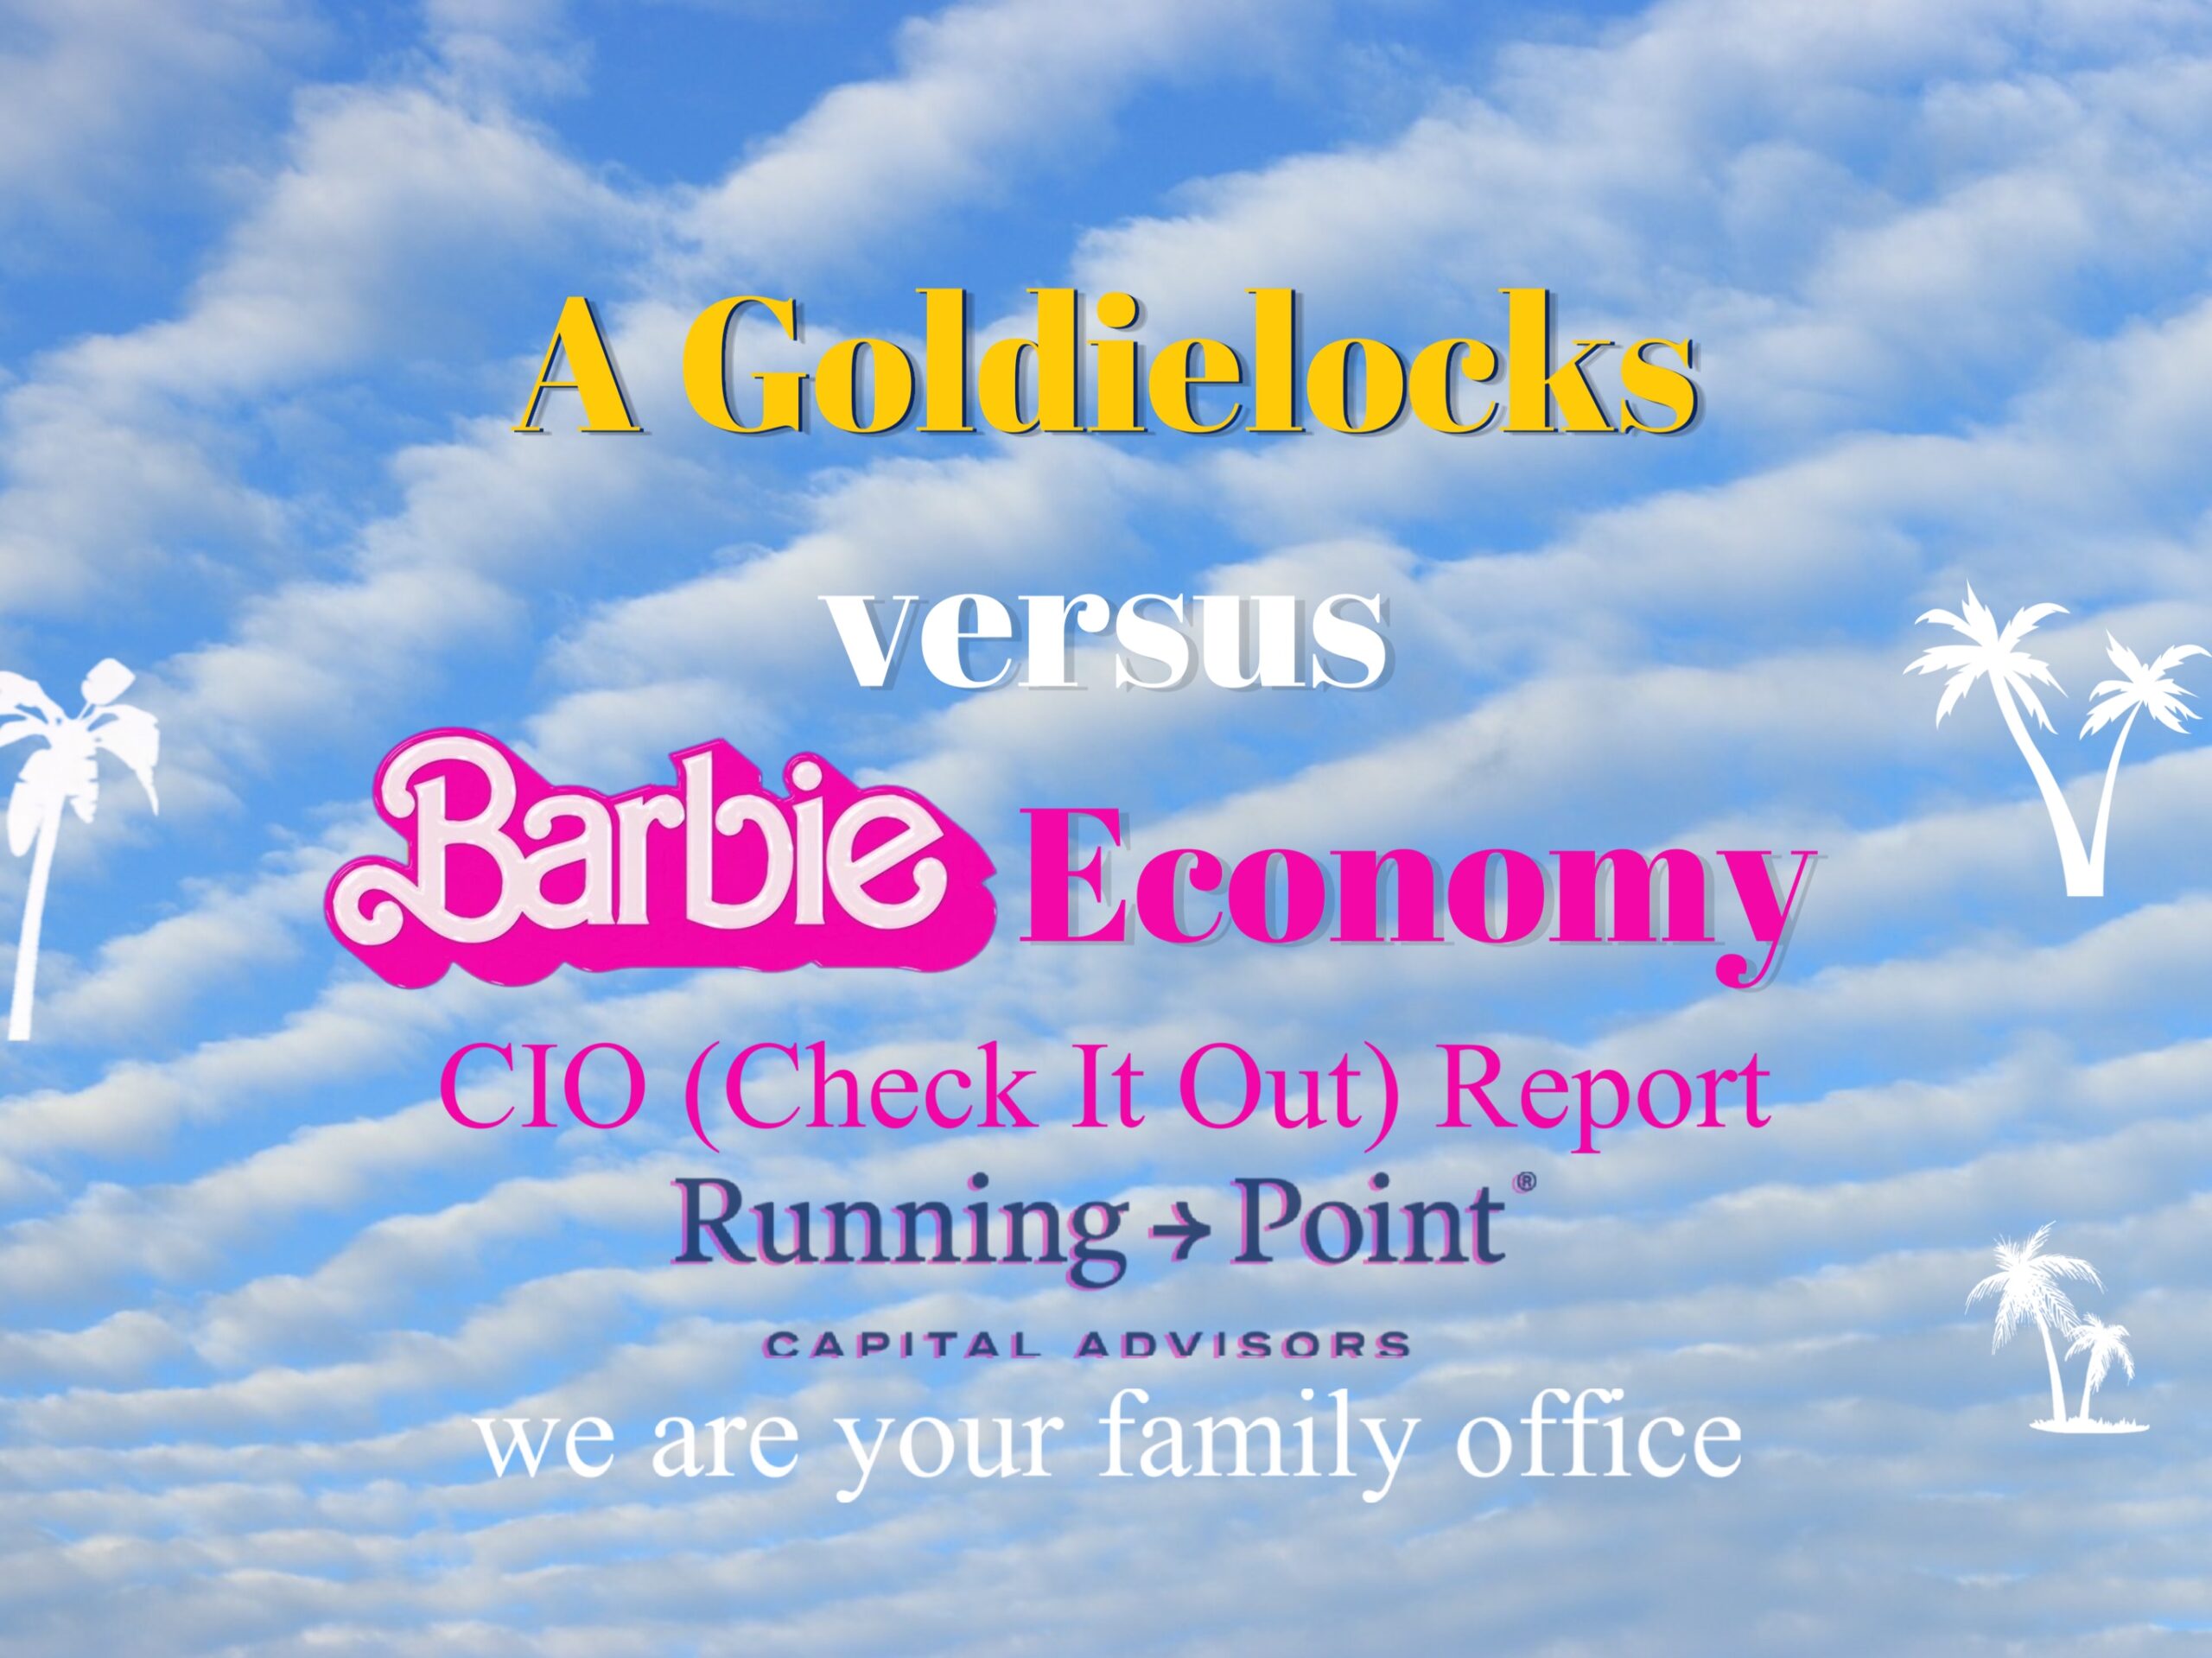 Goldielocks versus Barbie Economy